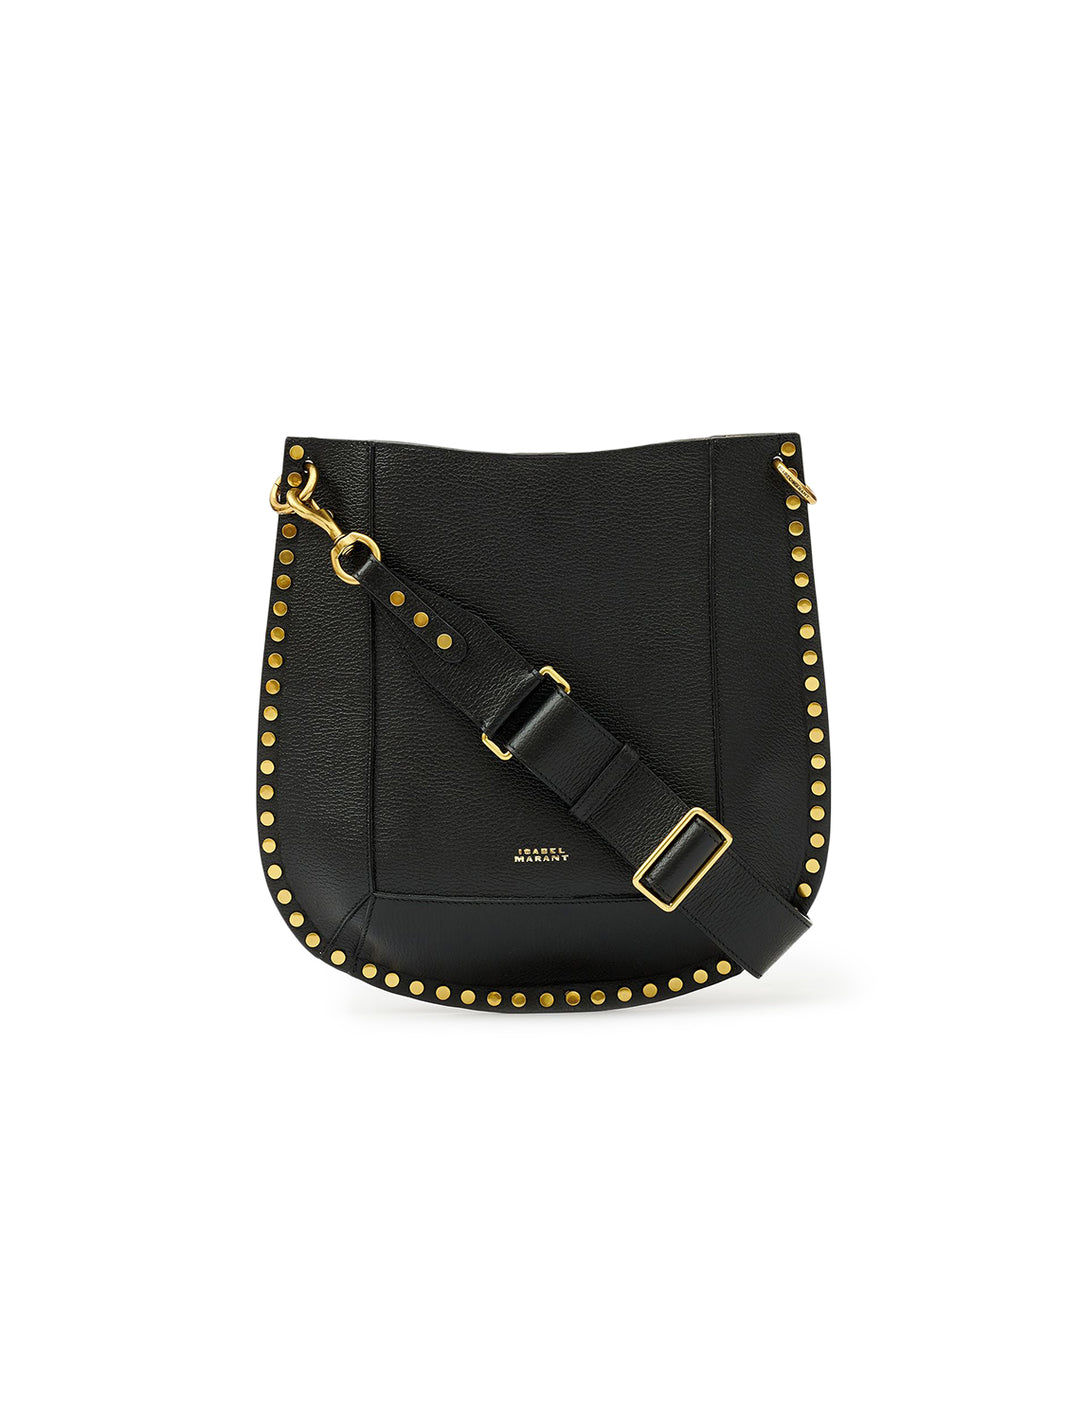 Front view of Isabel Marant Etoile's oksan grained leather shoulder bag in black.